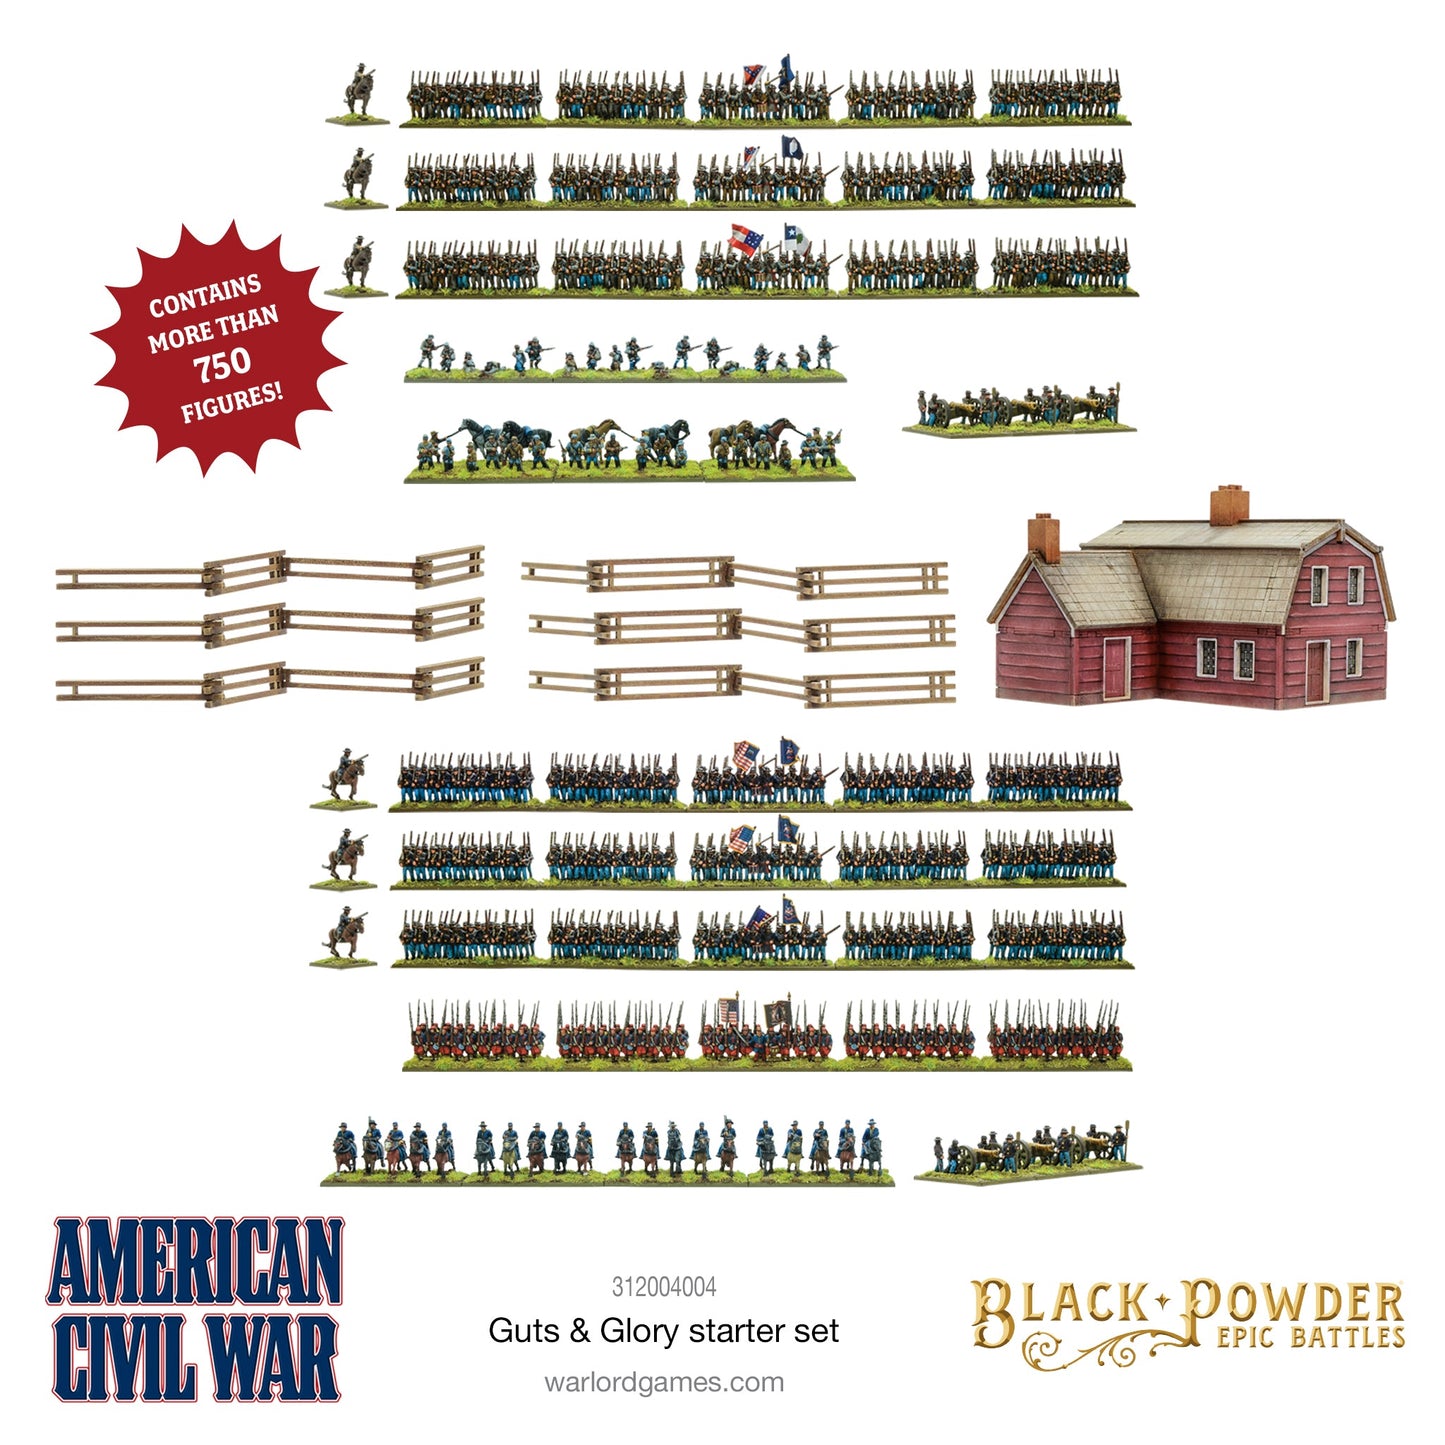 Warlord Games 312004004 American Civil War Guts and Glory Starter Set